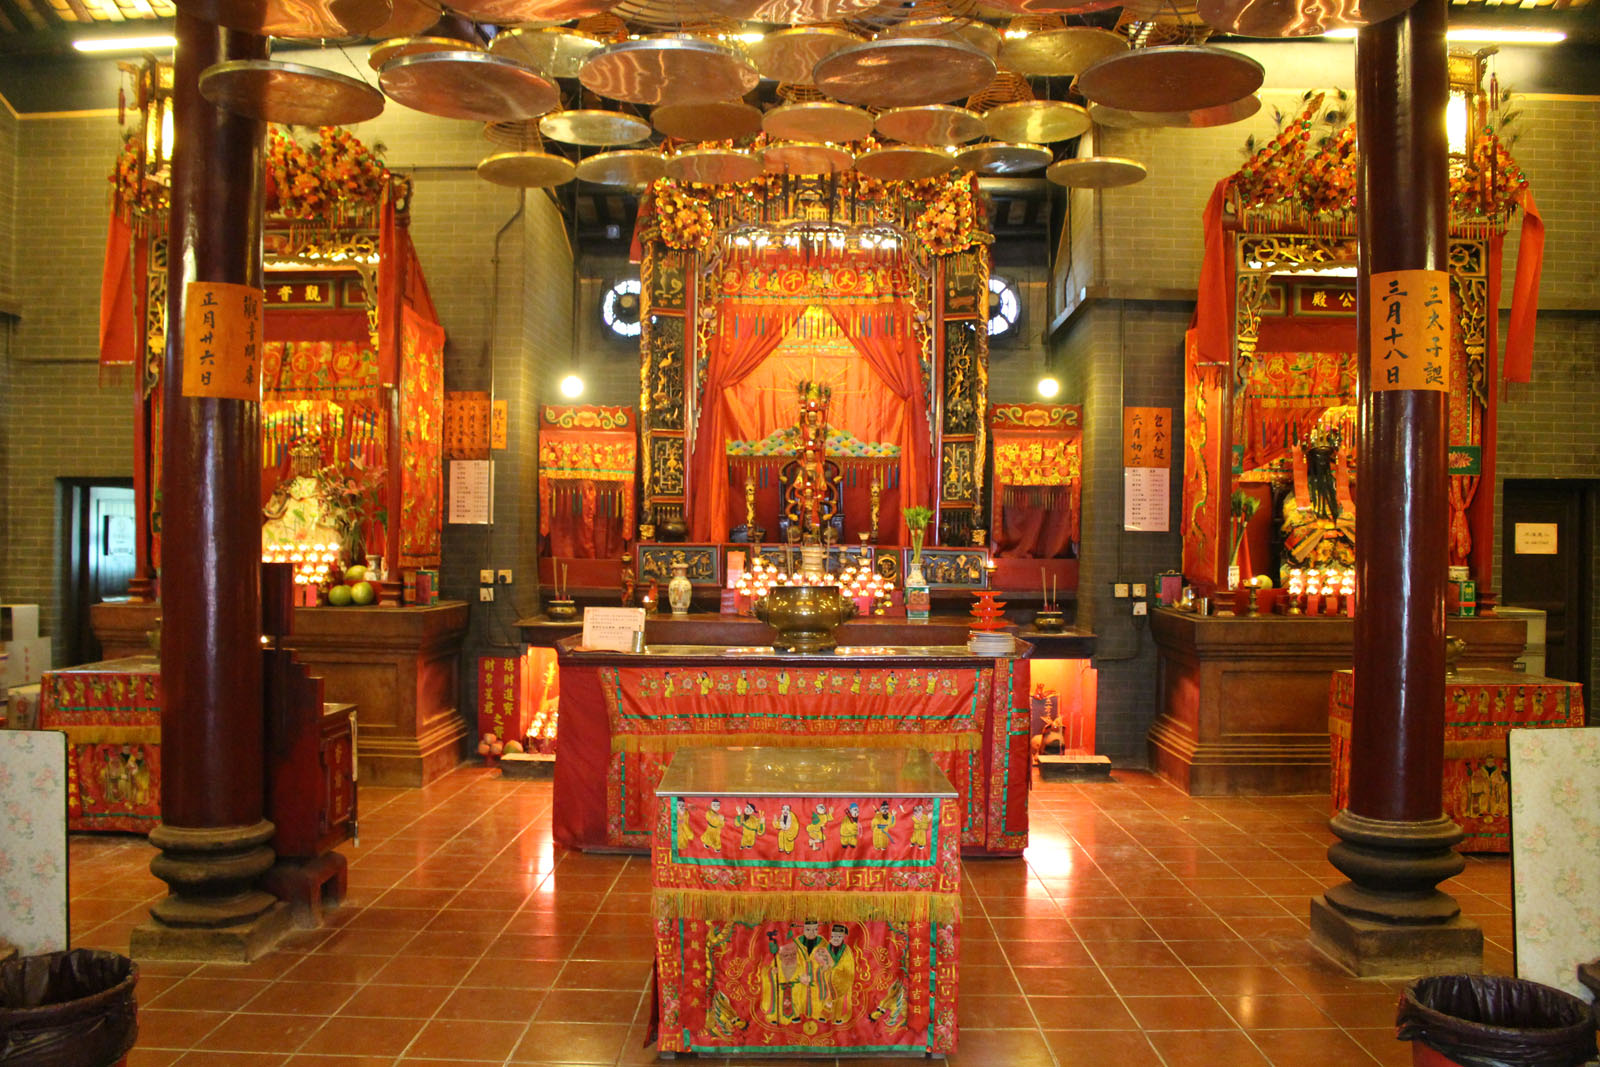 Photo 7: Sam Tai Tze Temple (Sham Shui Po)